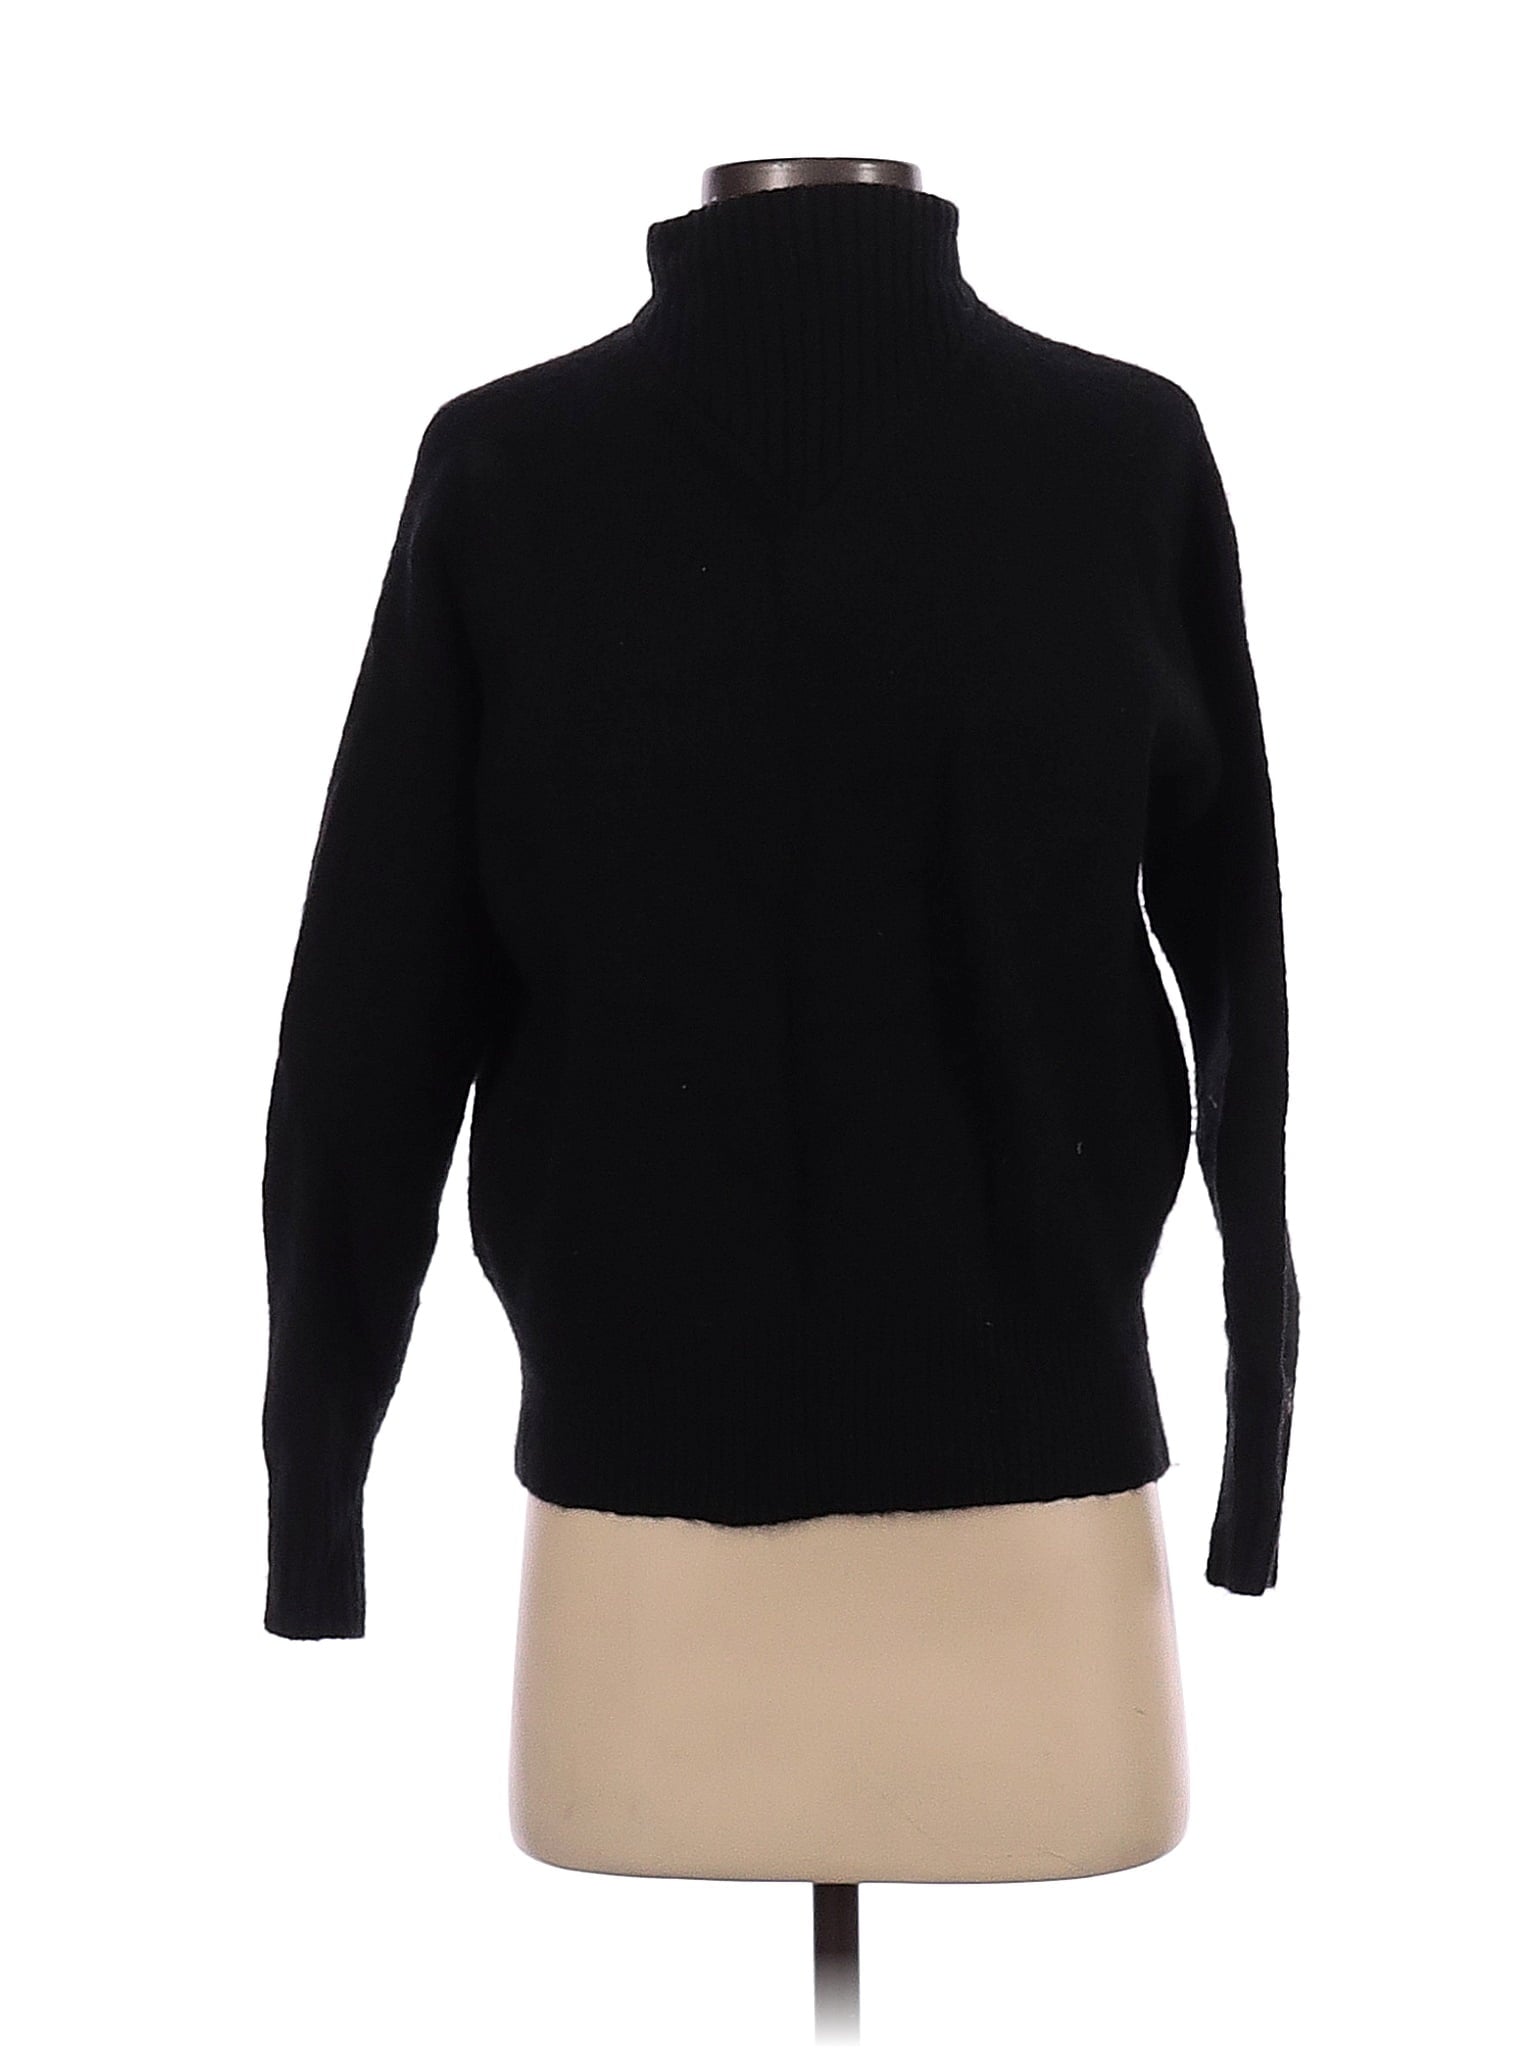 Dillon Mockneck Pullover Sweater size - XXS